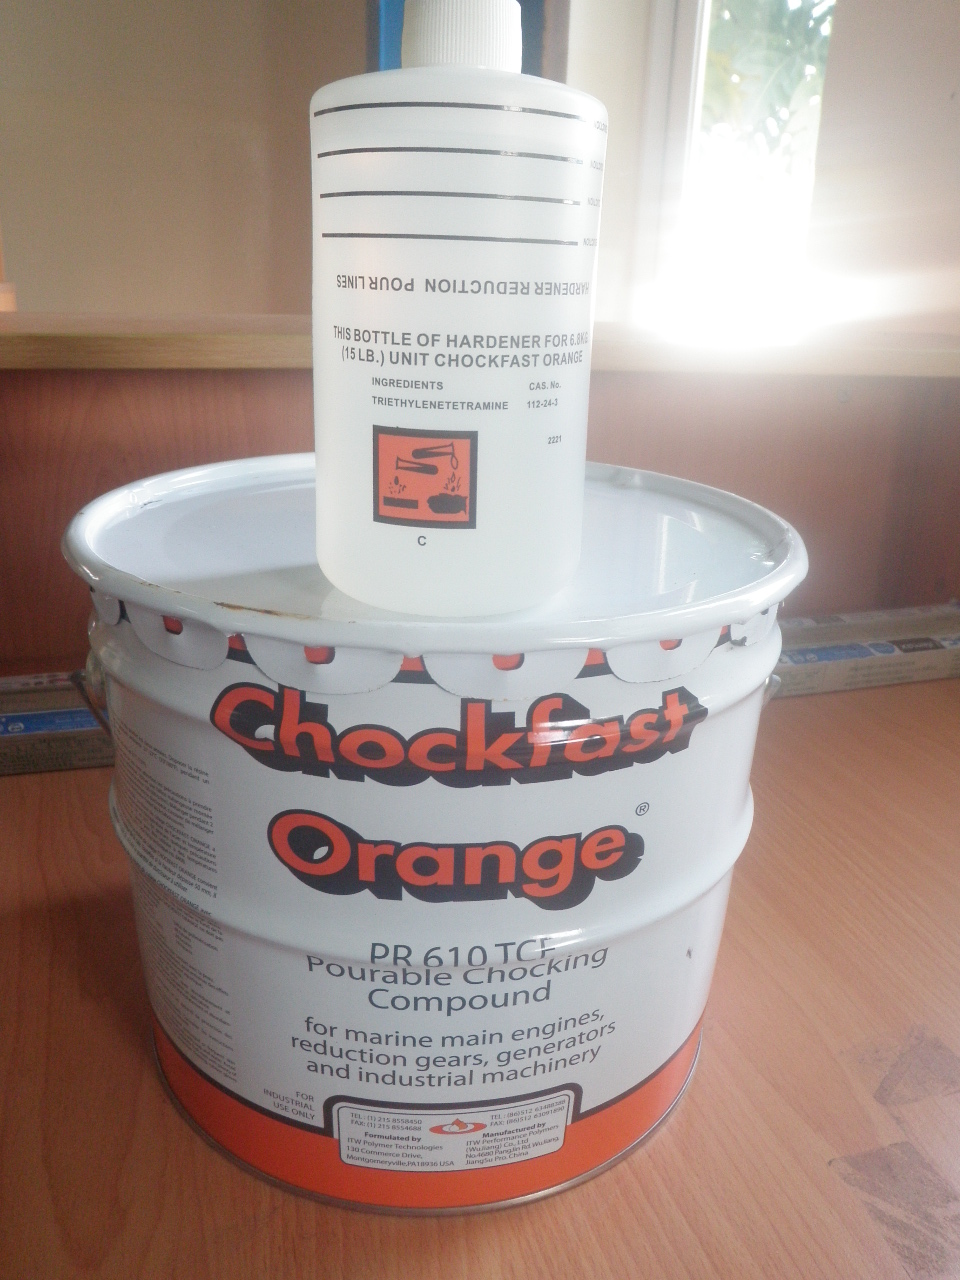 Keo Chockfast Orange PR610TCF